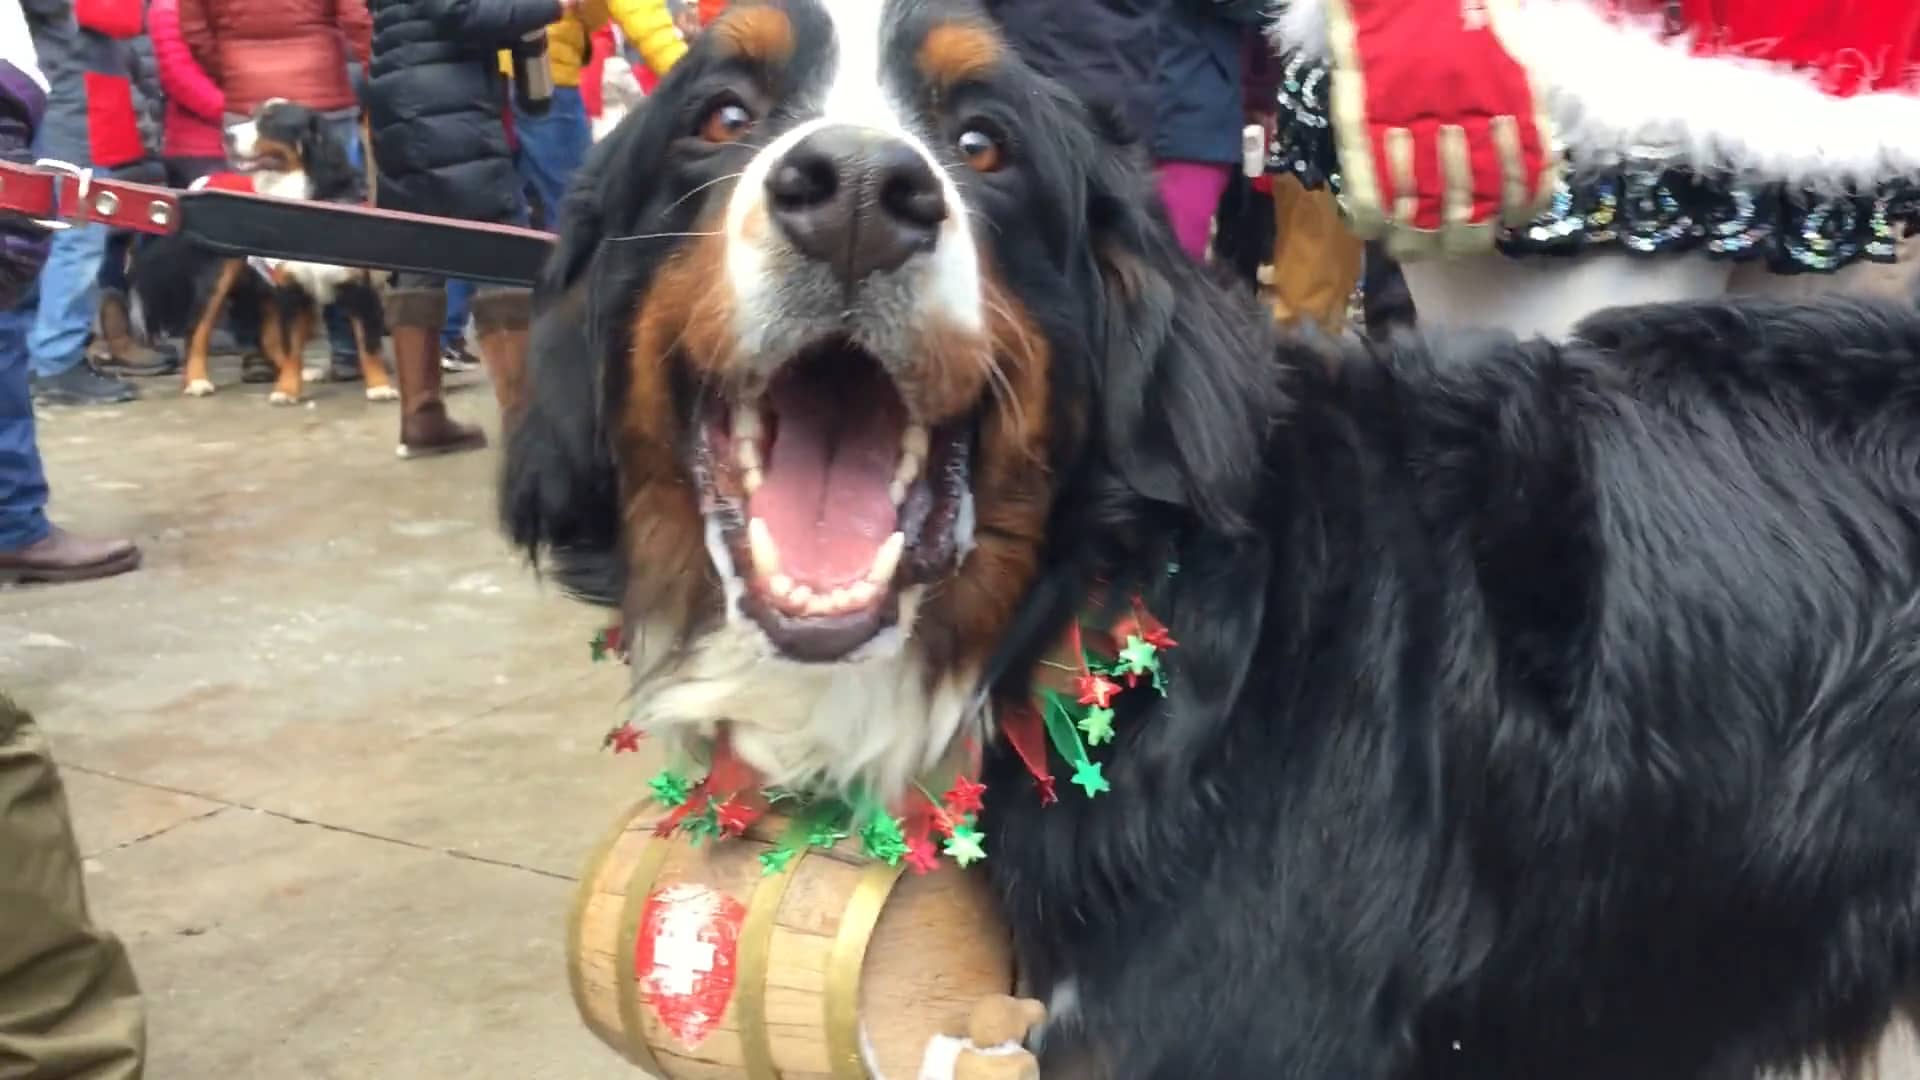 2016 Breckenridge Bernese Mountain Dog Parade on Vimeo